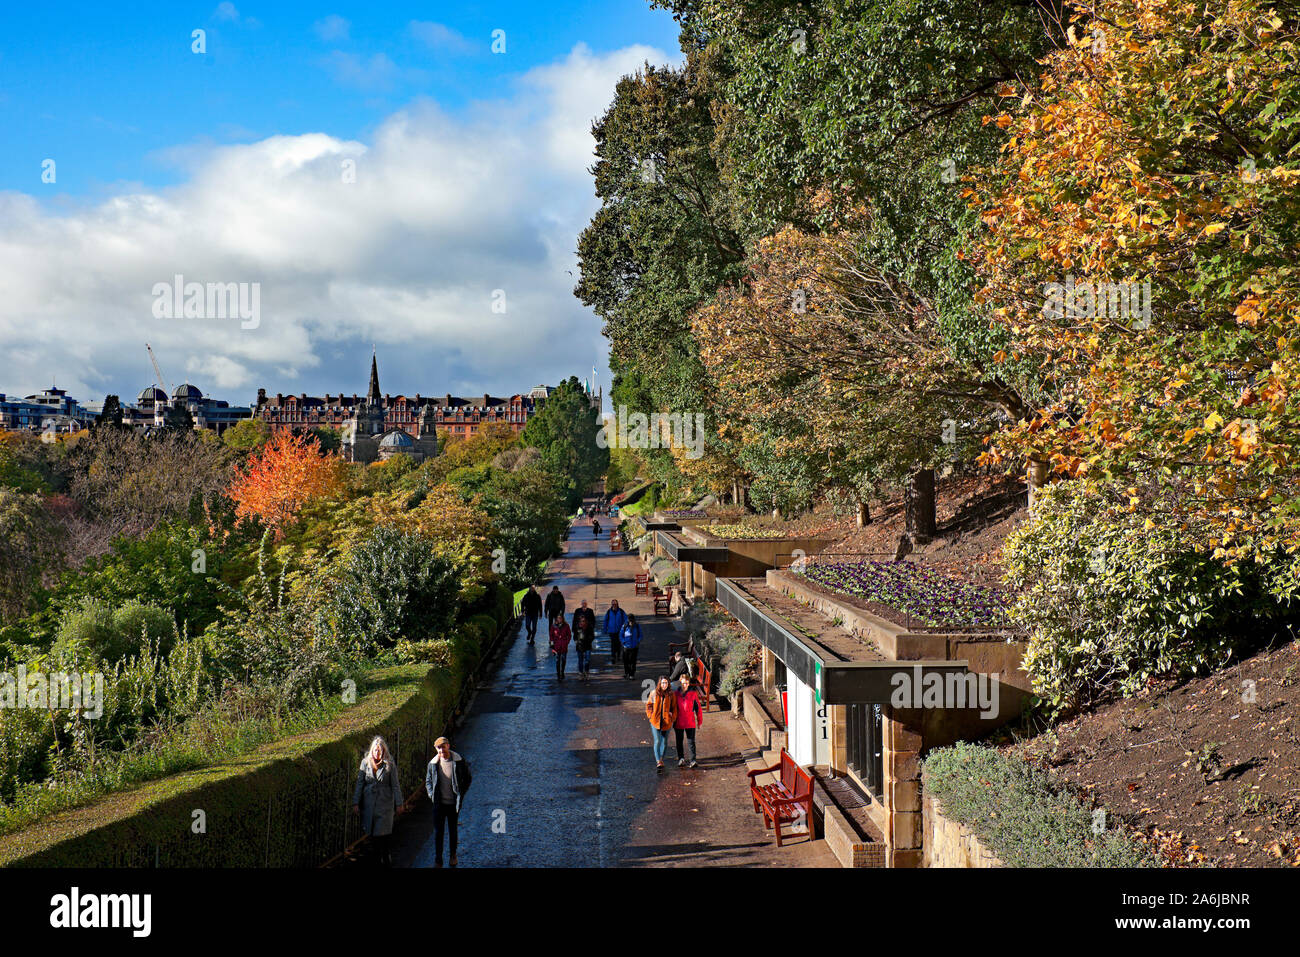 People walking in sunshine with autumnal foliage, Princes Street Gardens West, Edinburgh, Scotland, UK Stock Photo